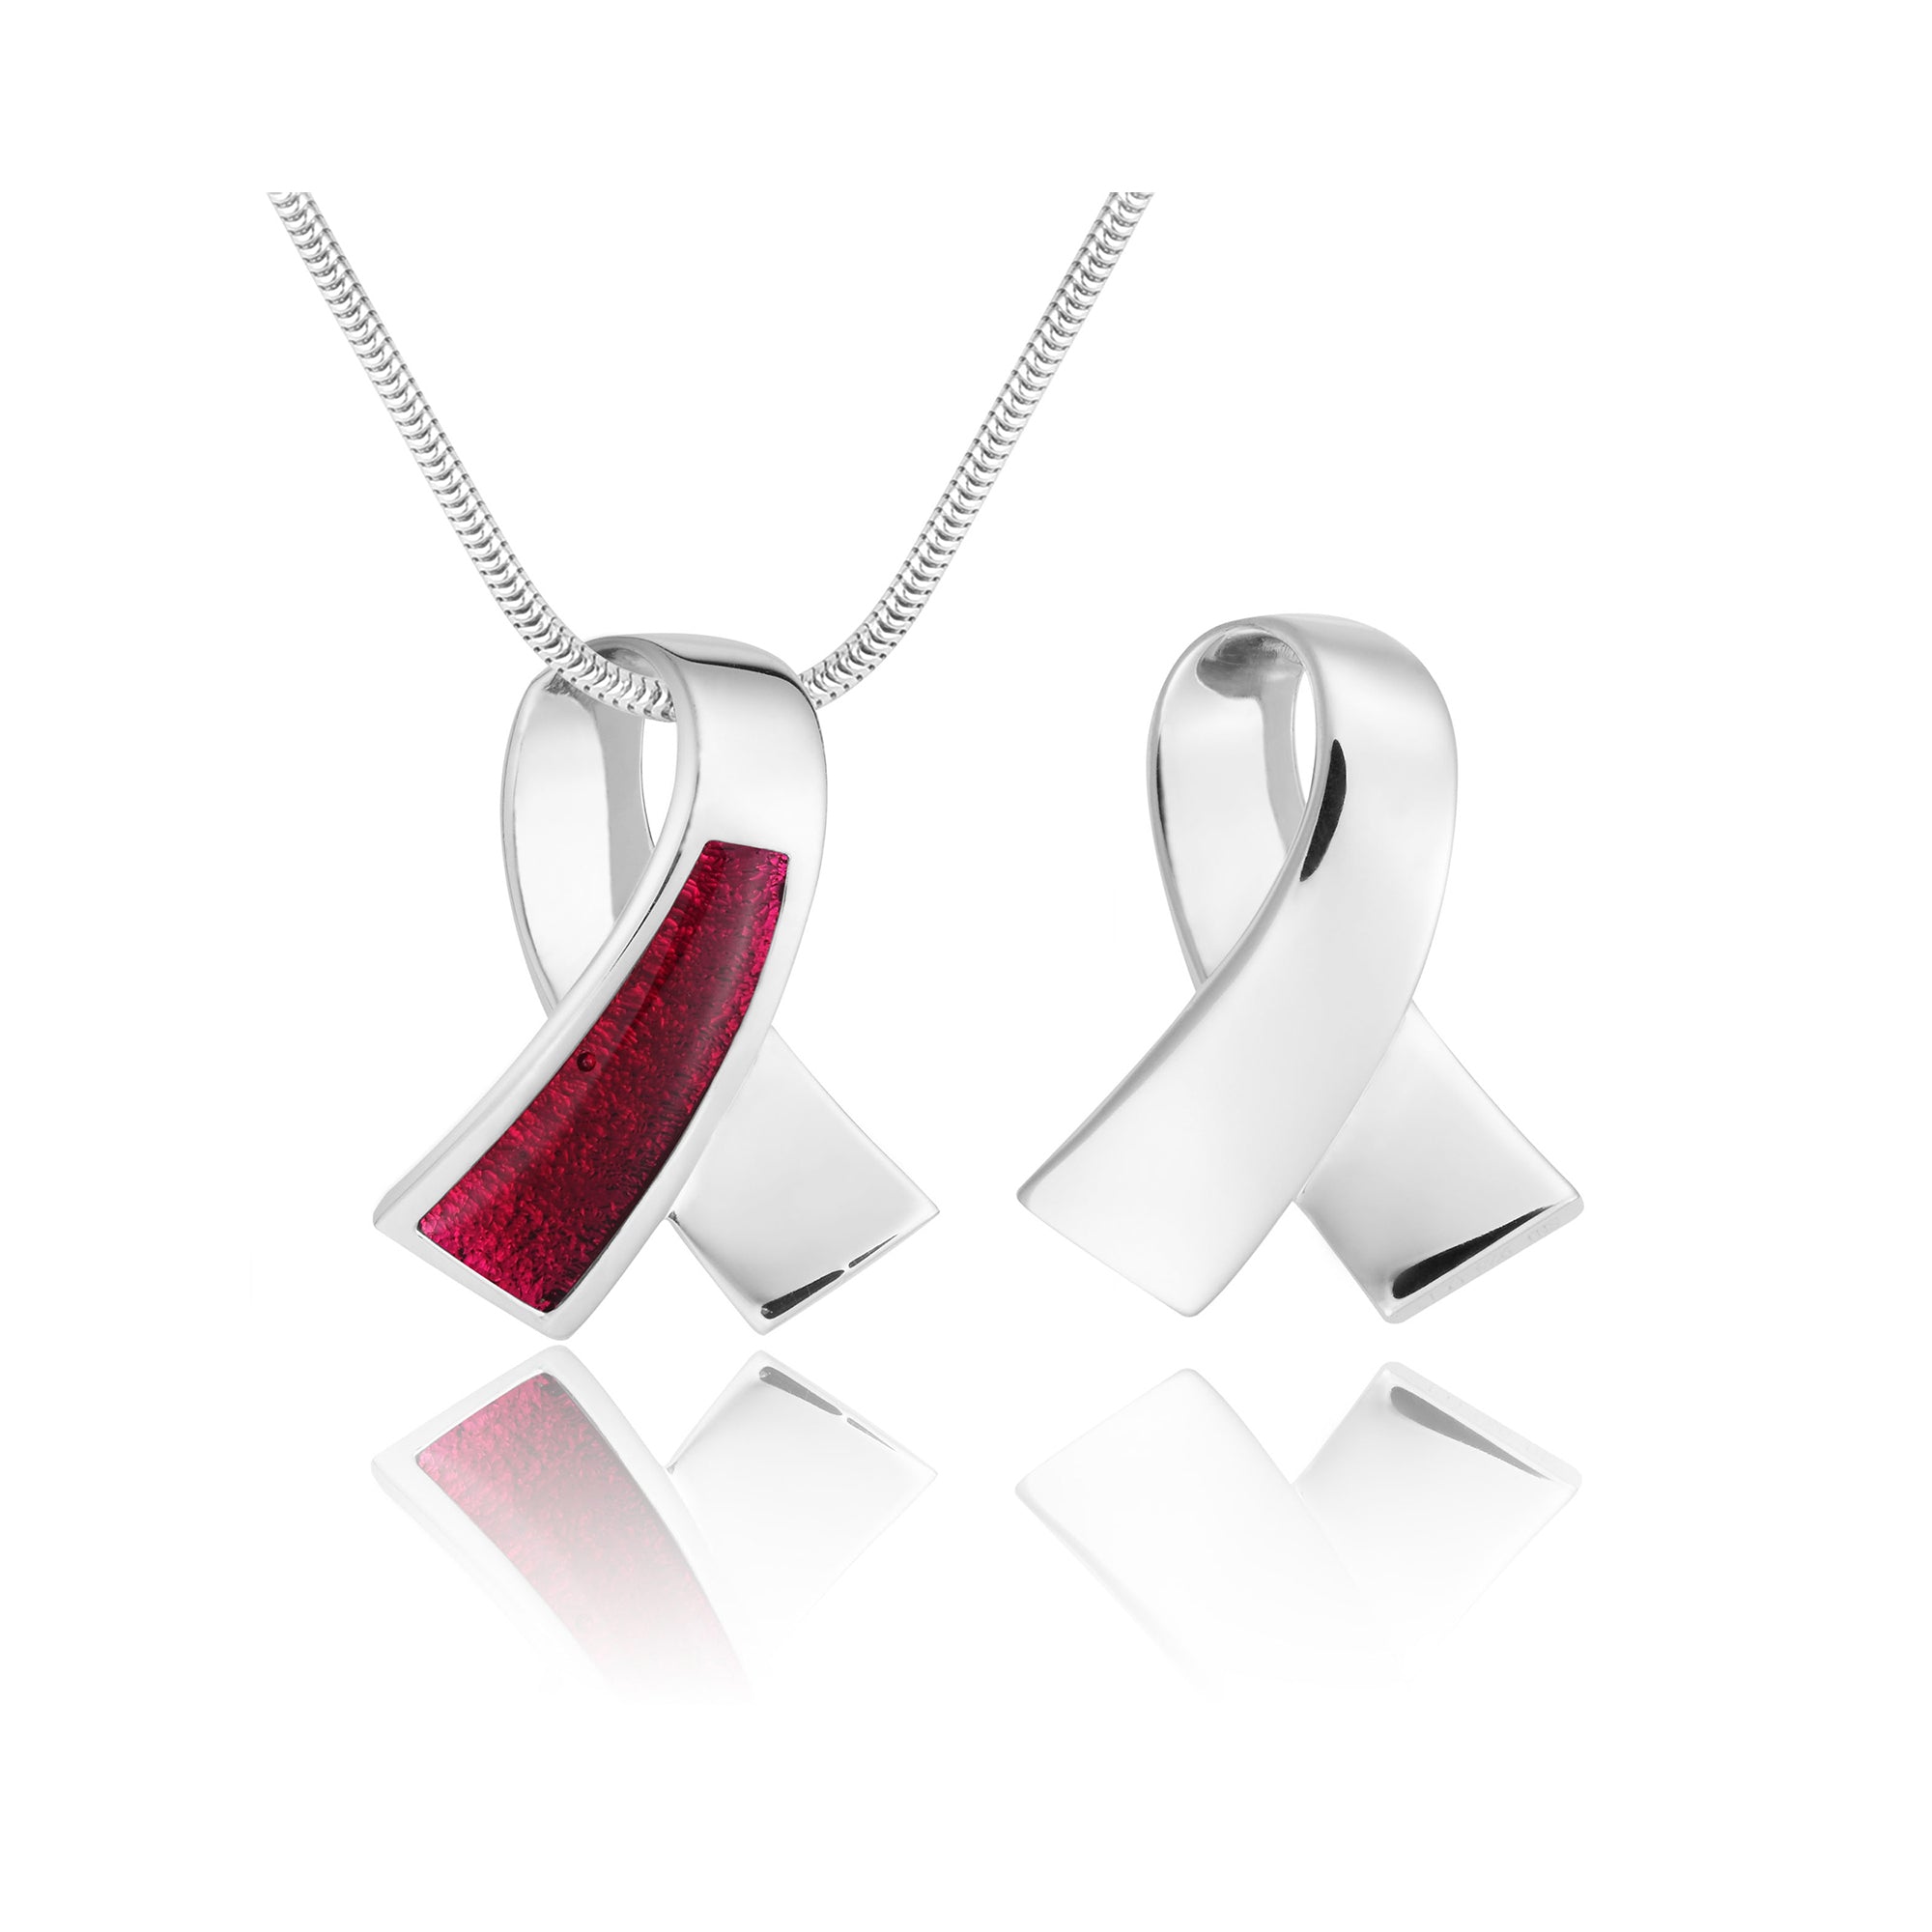 Cancer Awareness Ribbon Charm | Choose Hope